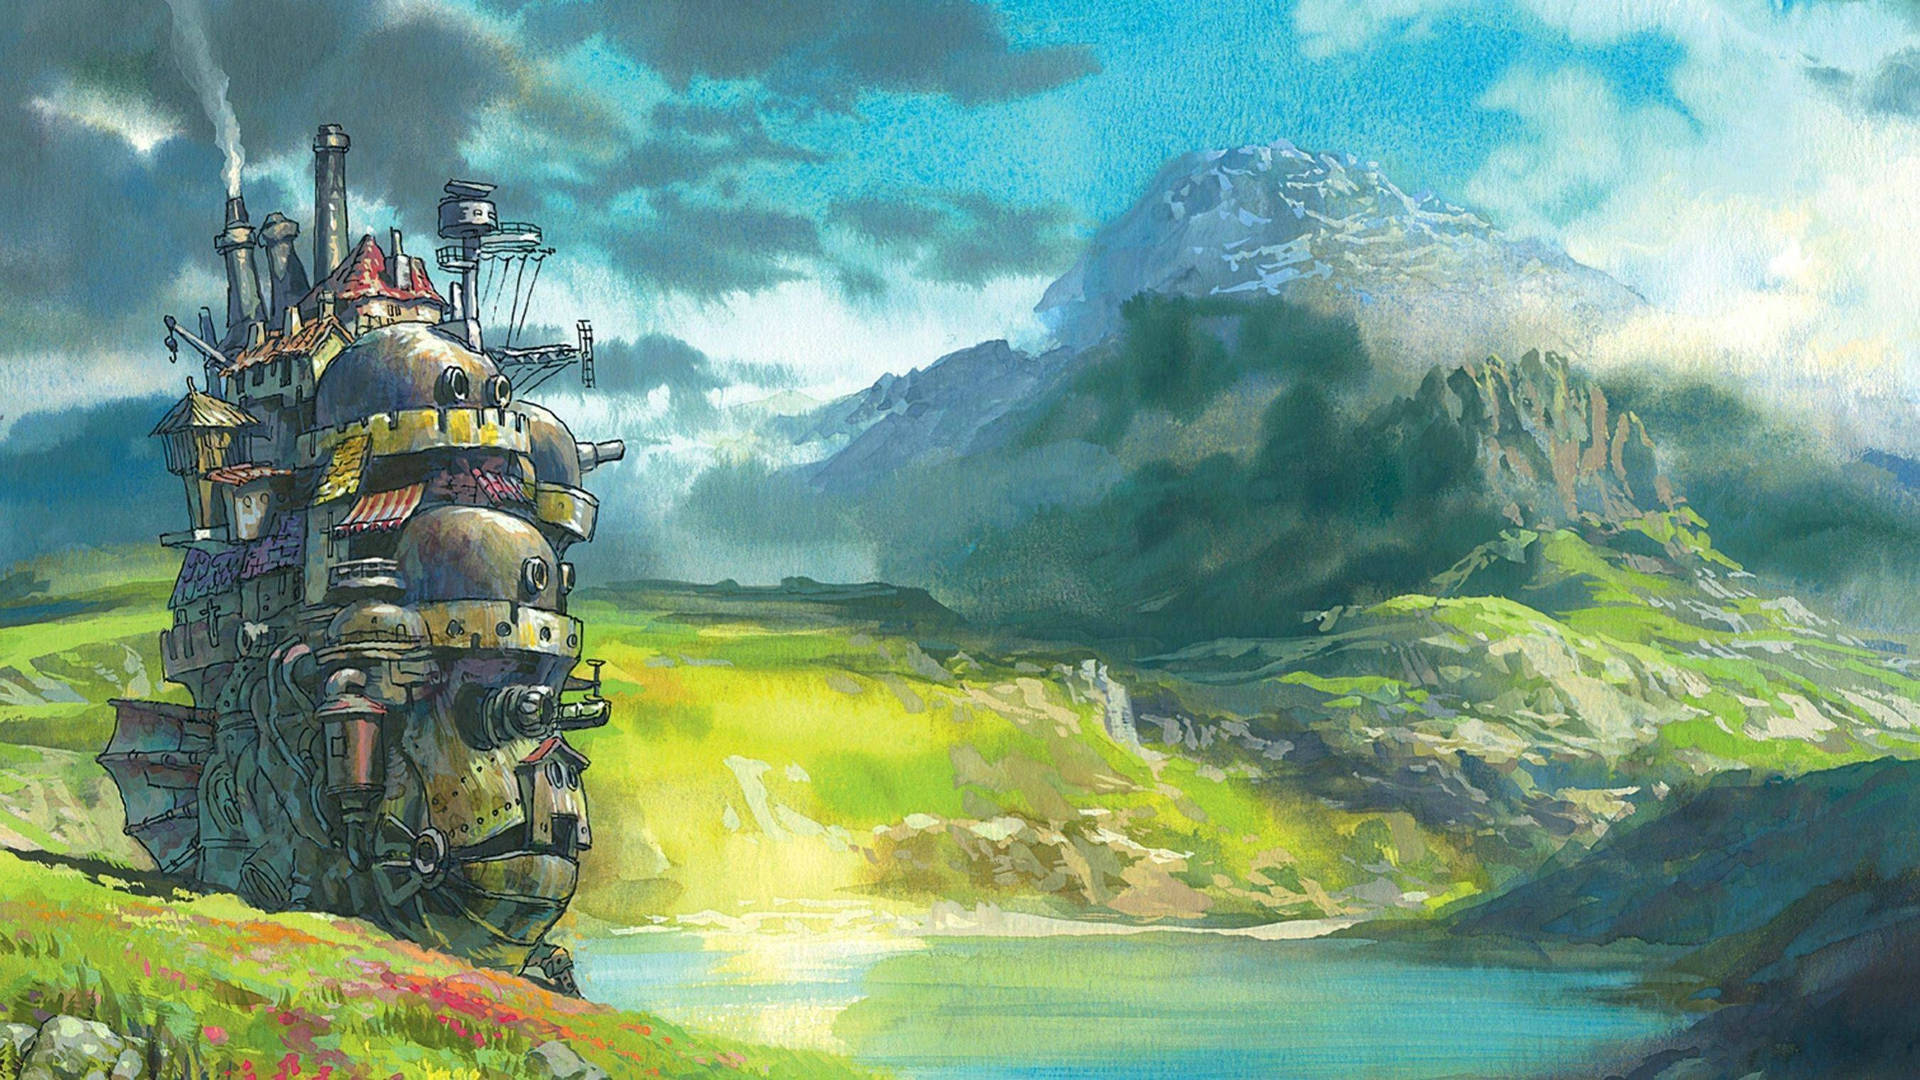 Studio Ghibli Howl's Moving Castle Background